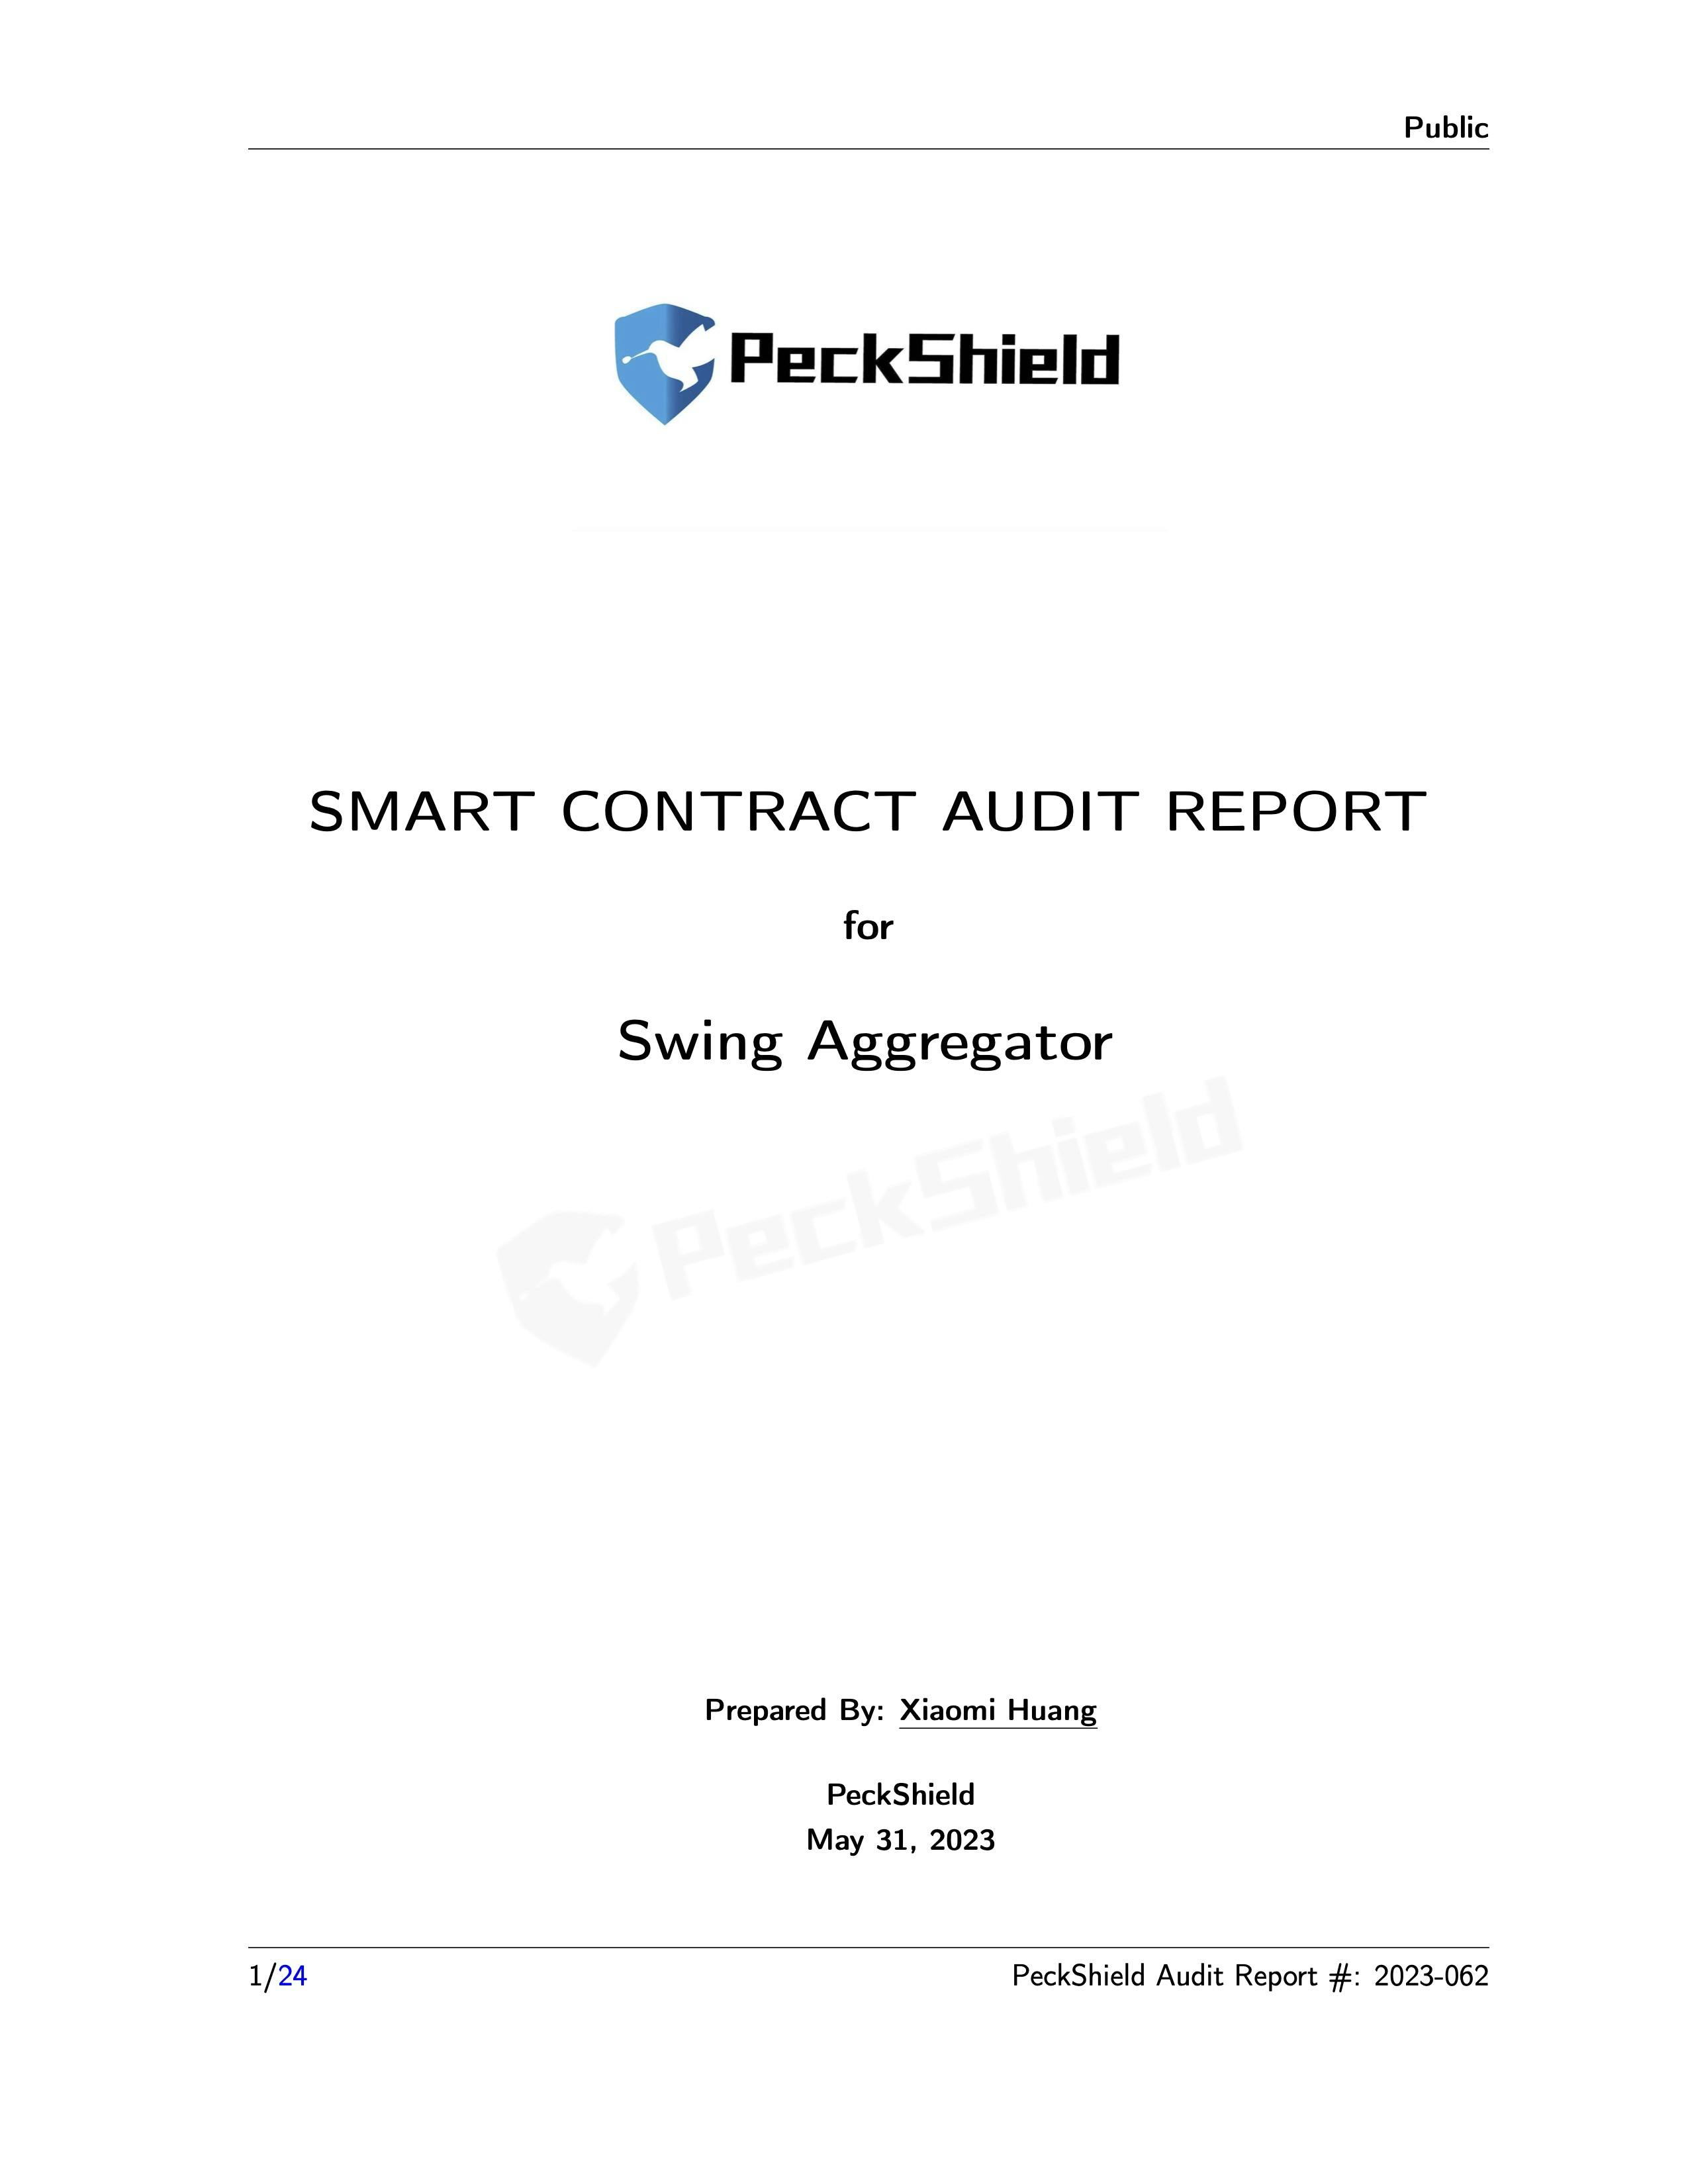 PeckShield Audit Report 01